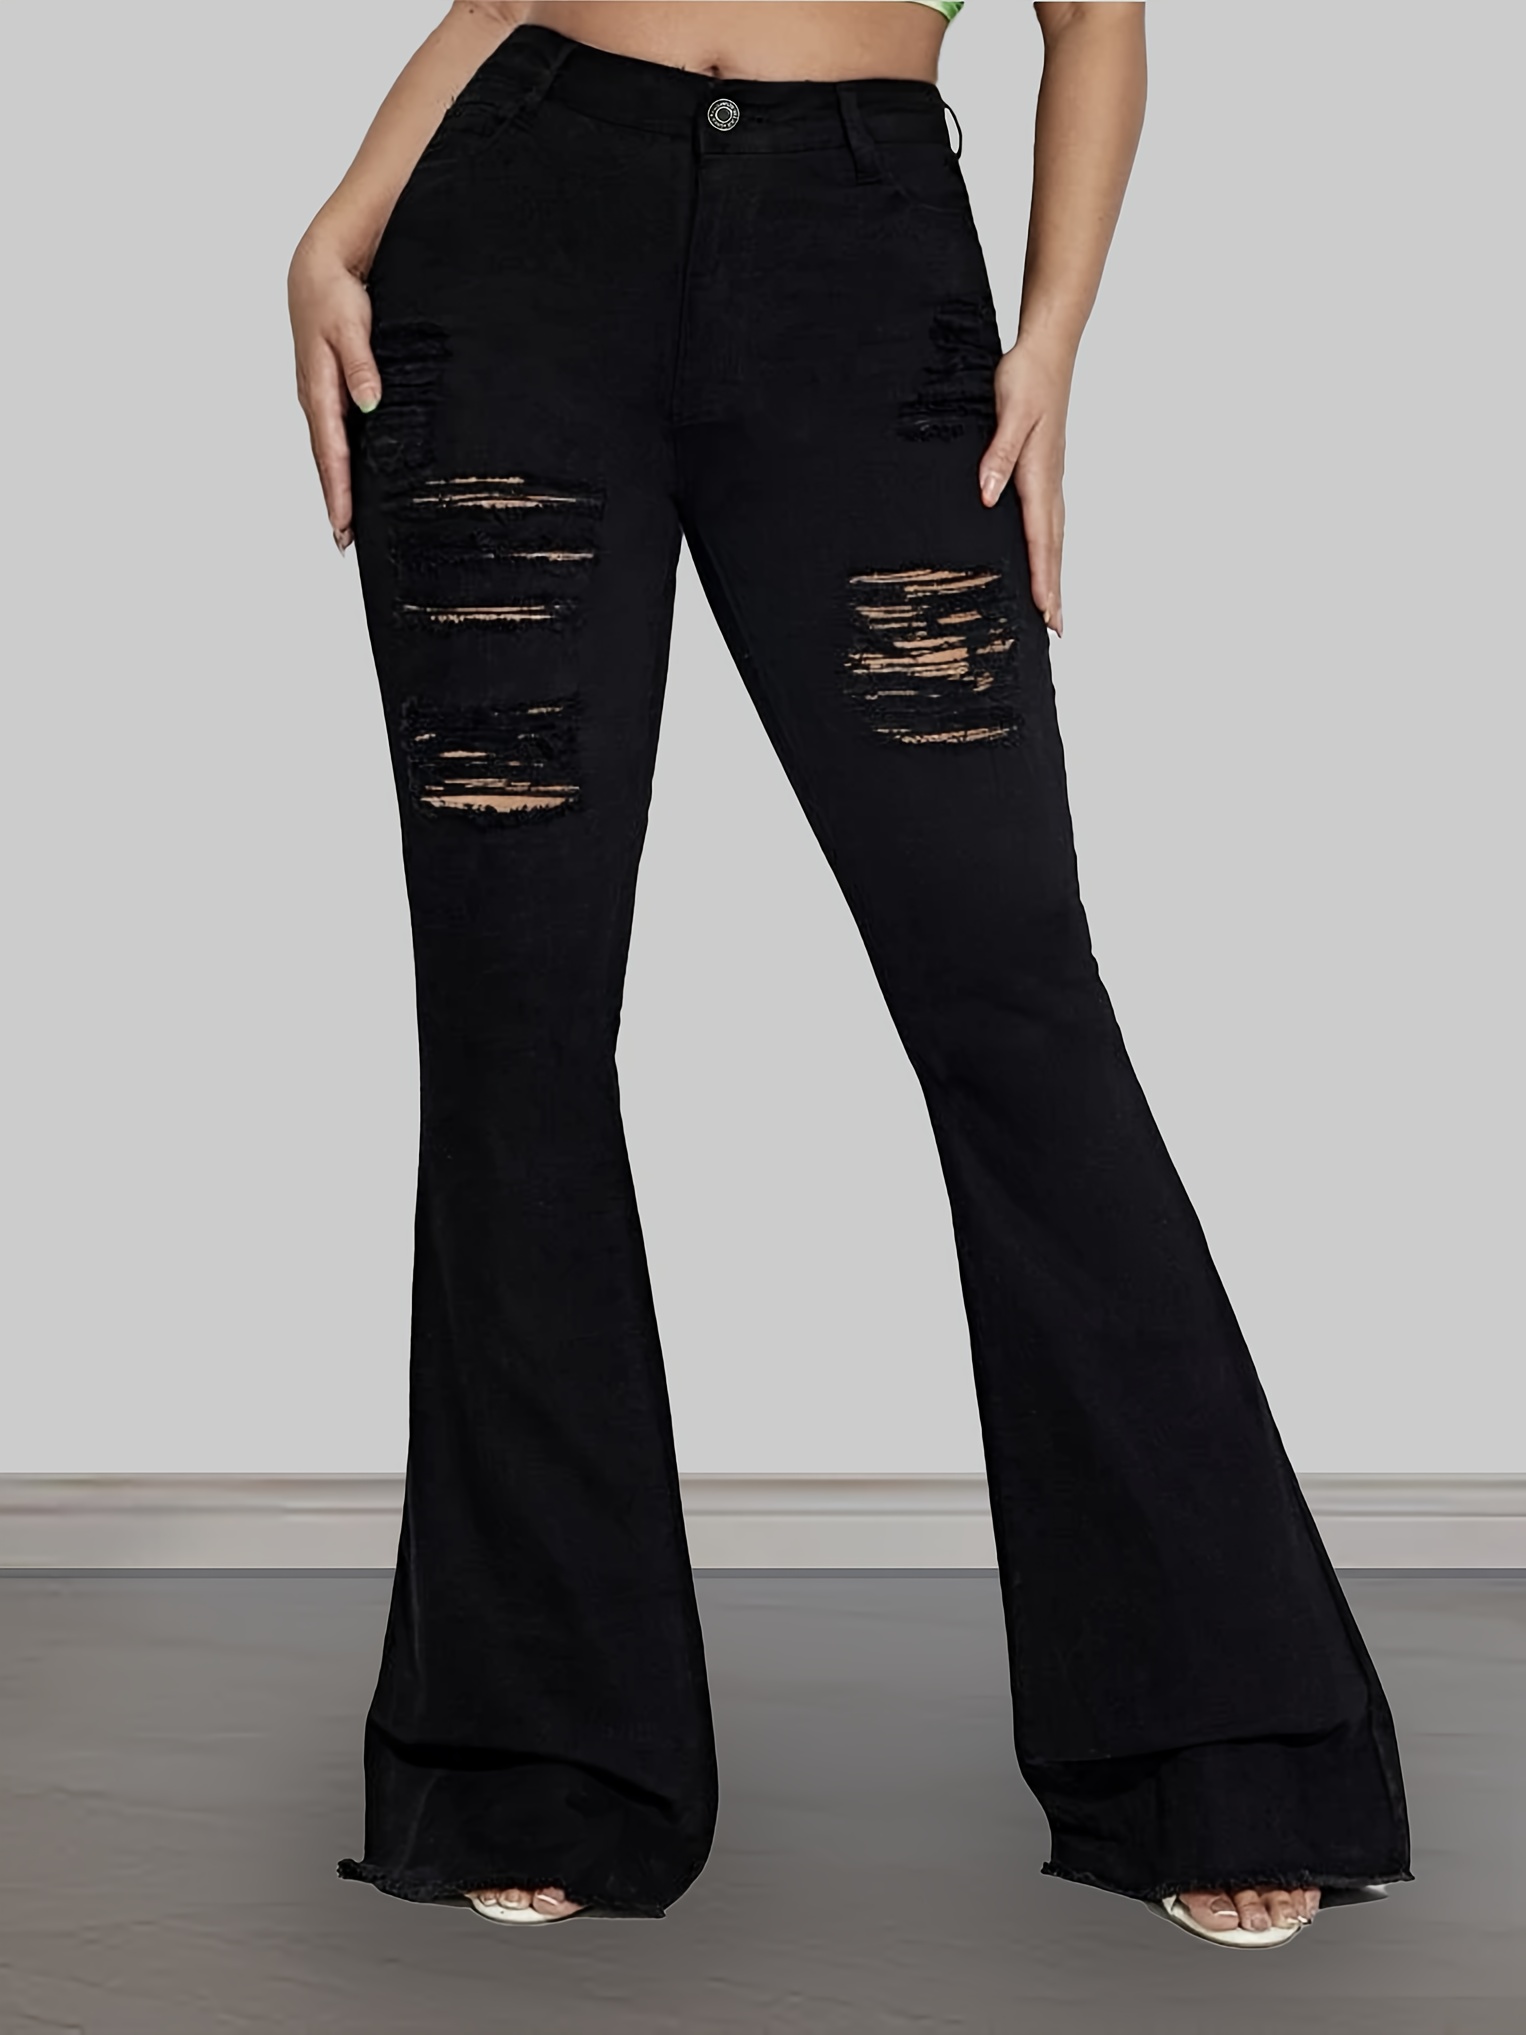 Women's Flare Bell Bottom Jeans Destroyed Flare Denim Pants 70s